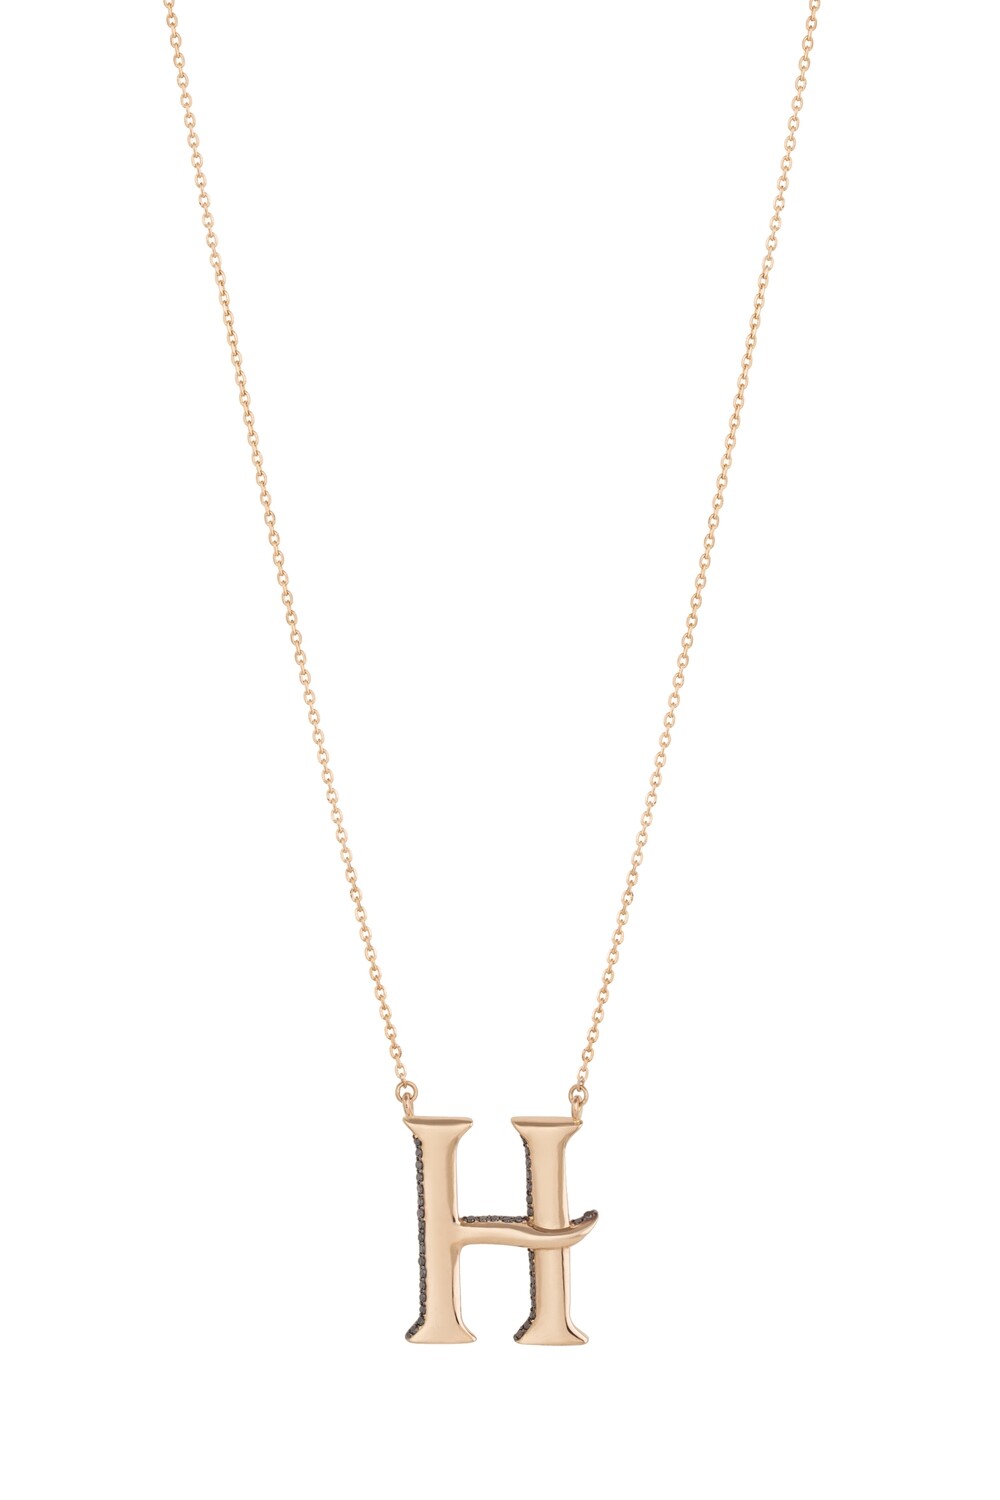 Initials Fancy Diamond Necklace, H